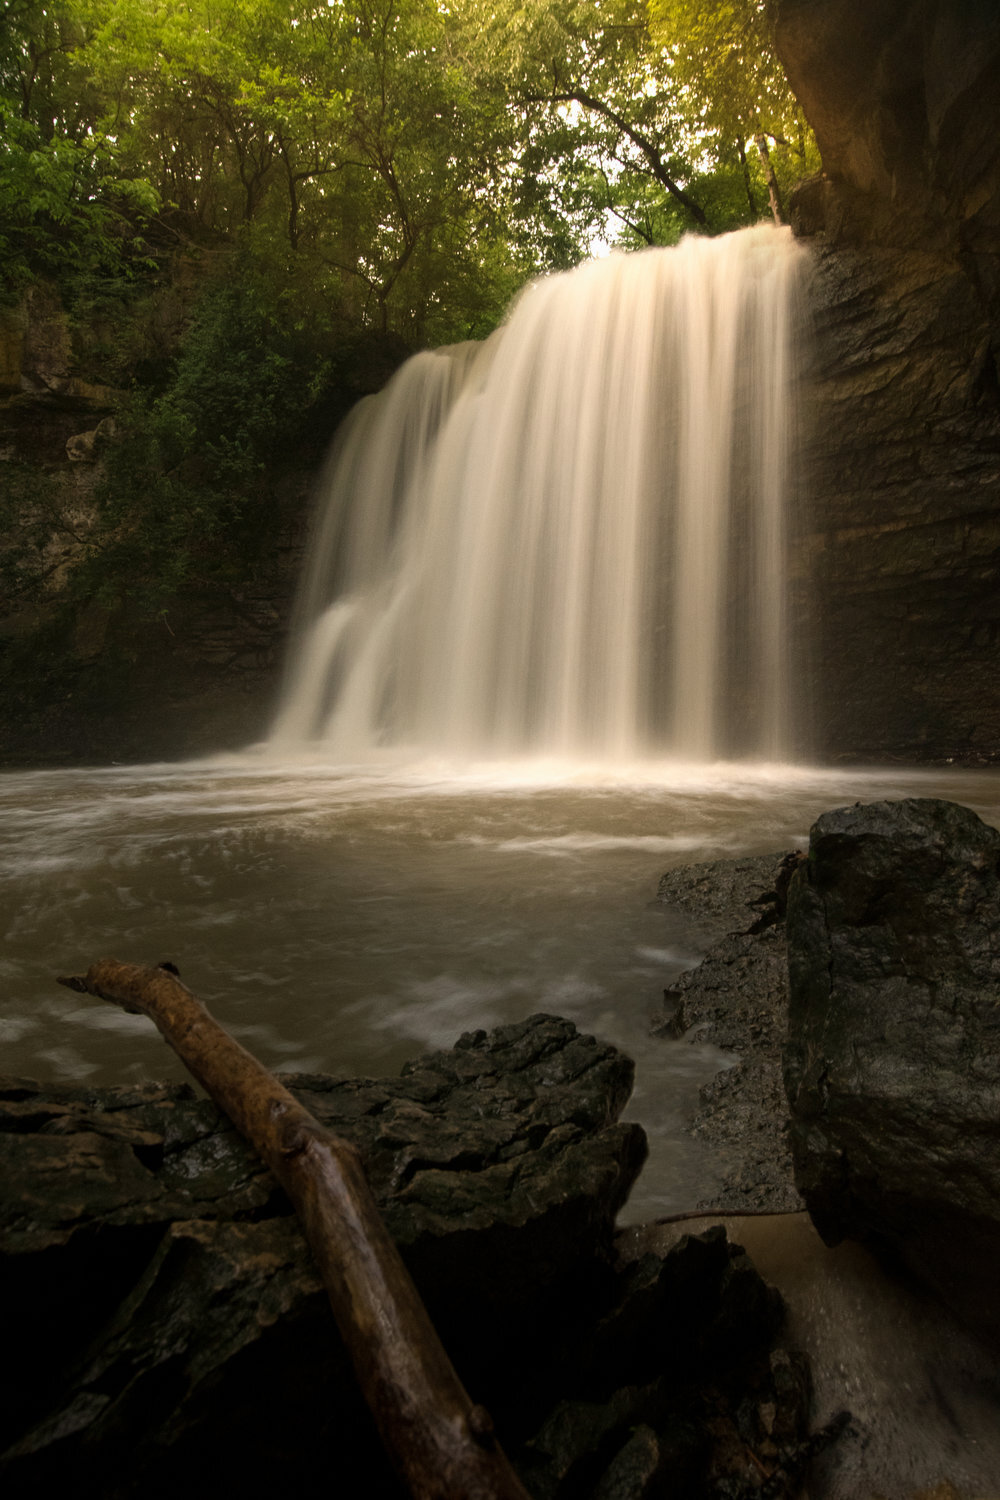 Long exposure photo of Hayden Falls waterfall in Dublin, Ohio. Photo taken by Aaron Aldhizer